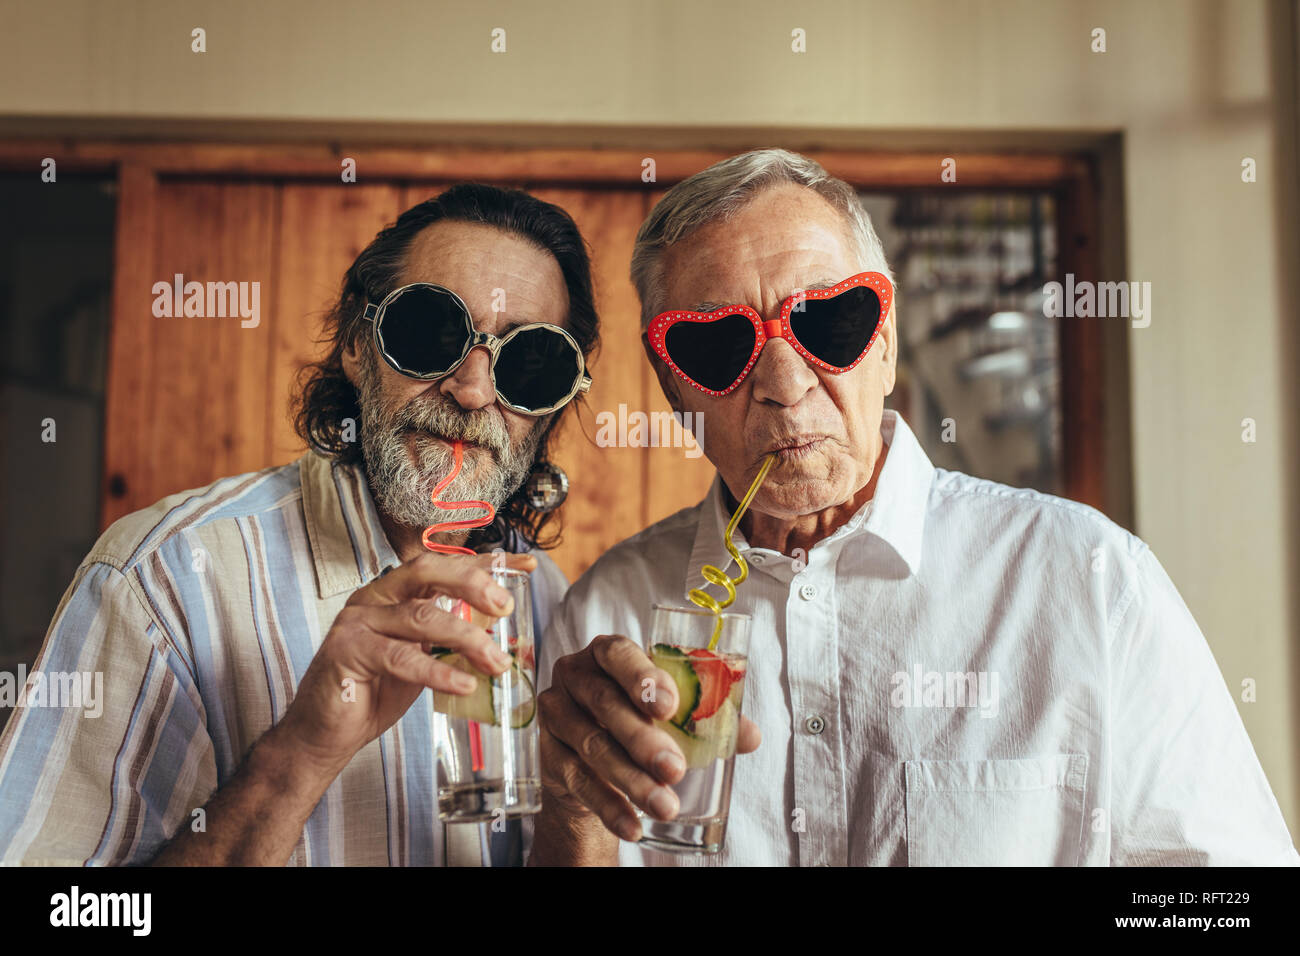 https://c8.alamy.com/comp/RFT229/senior-men-wearing-funny-sunglasses-drinking-juice-with-straw-elderly-friends-with-crazy-eyewear-having-juice-indoors-RFT229.jpg